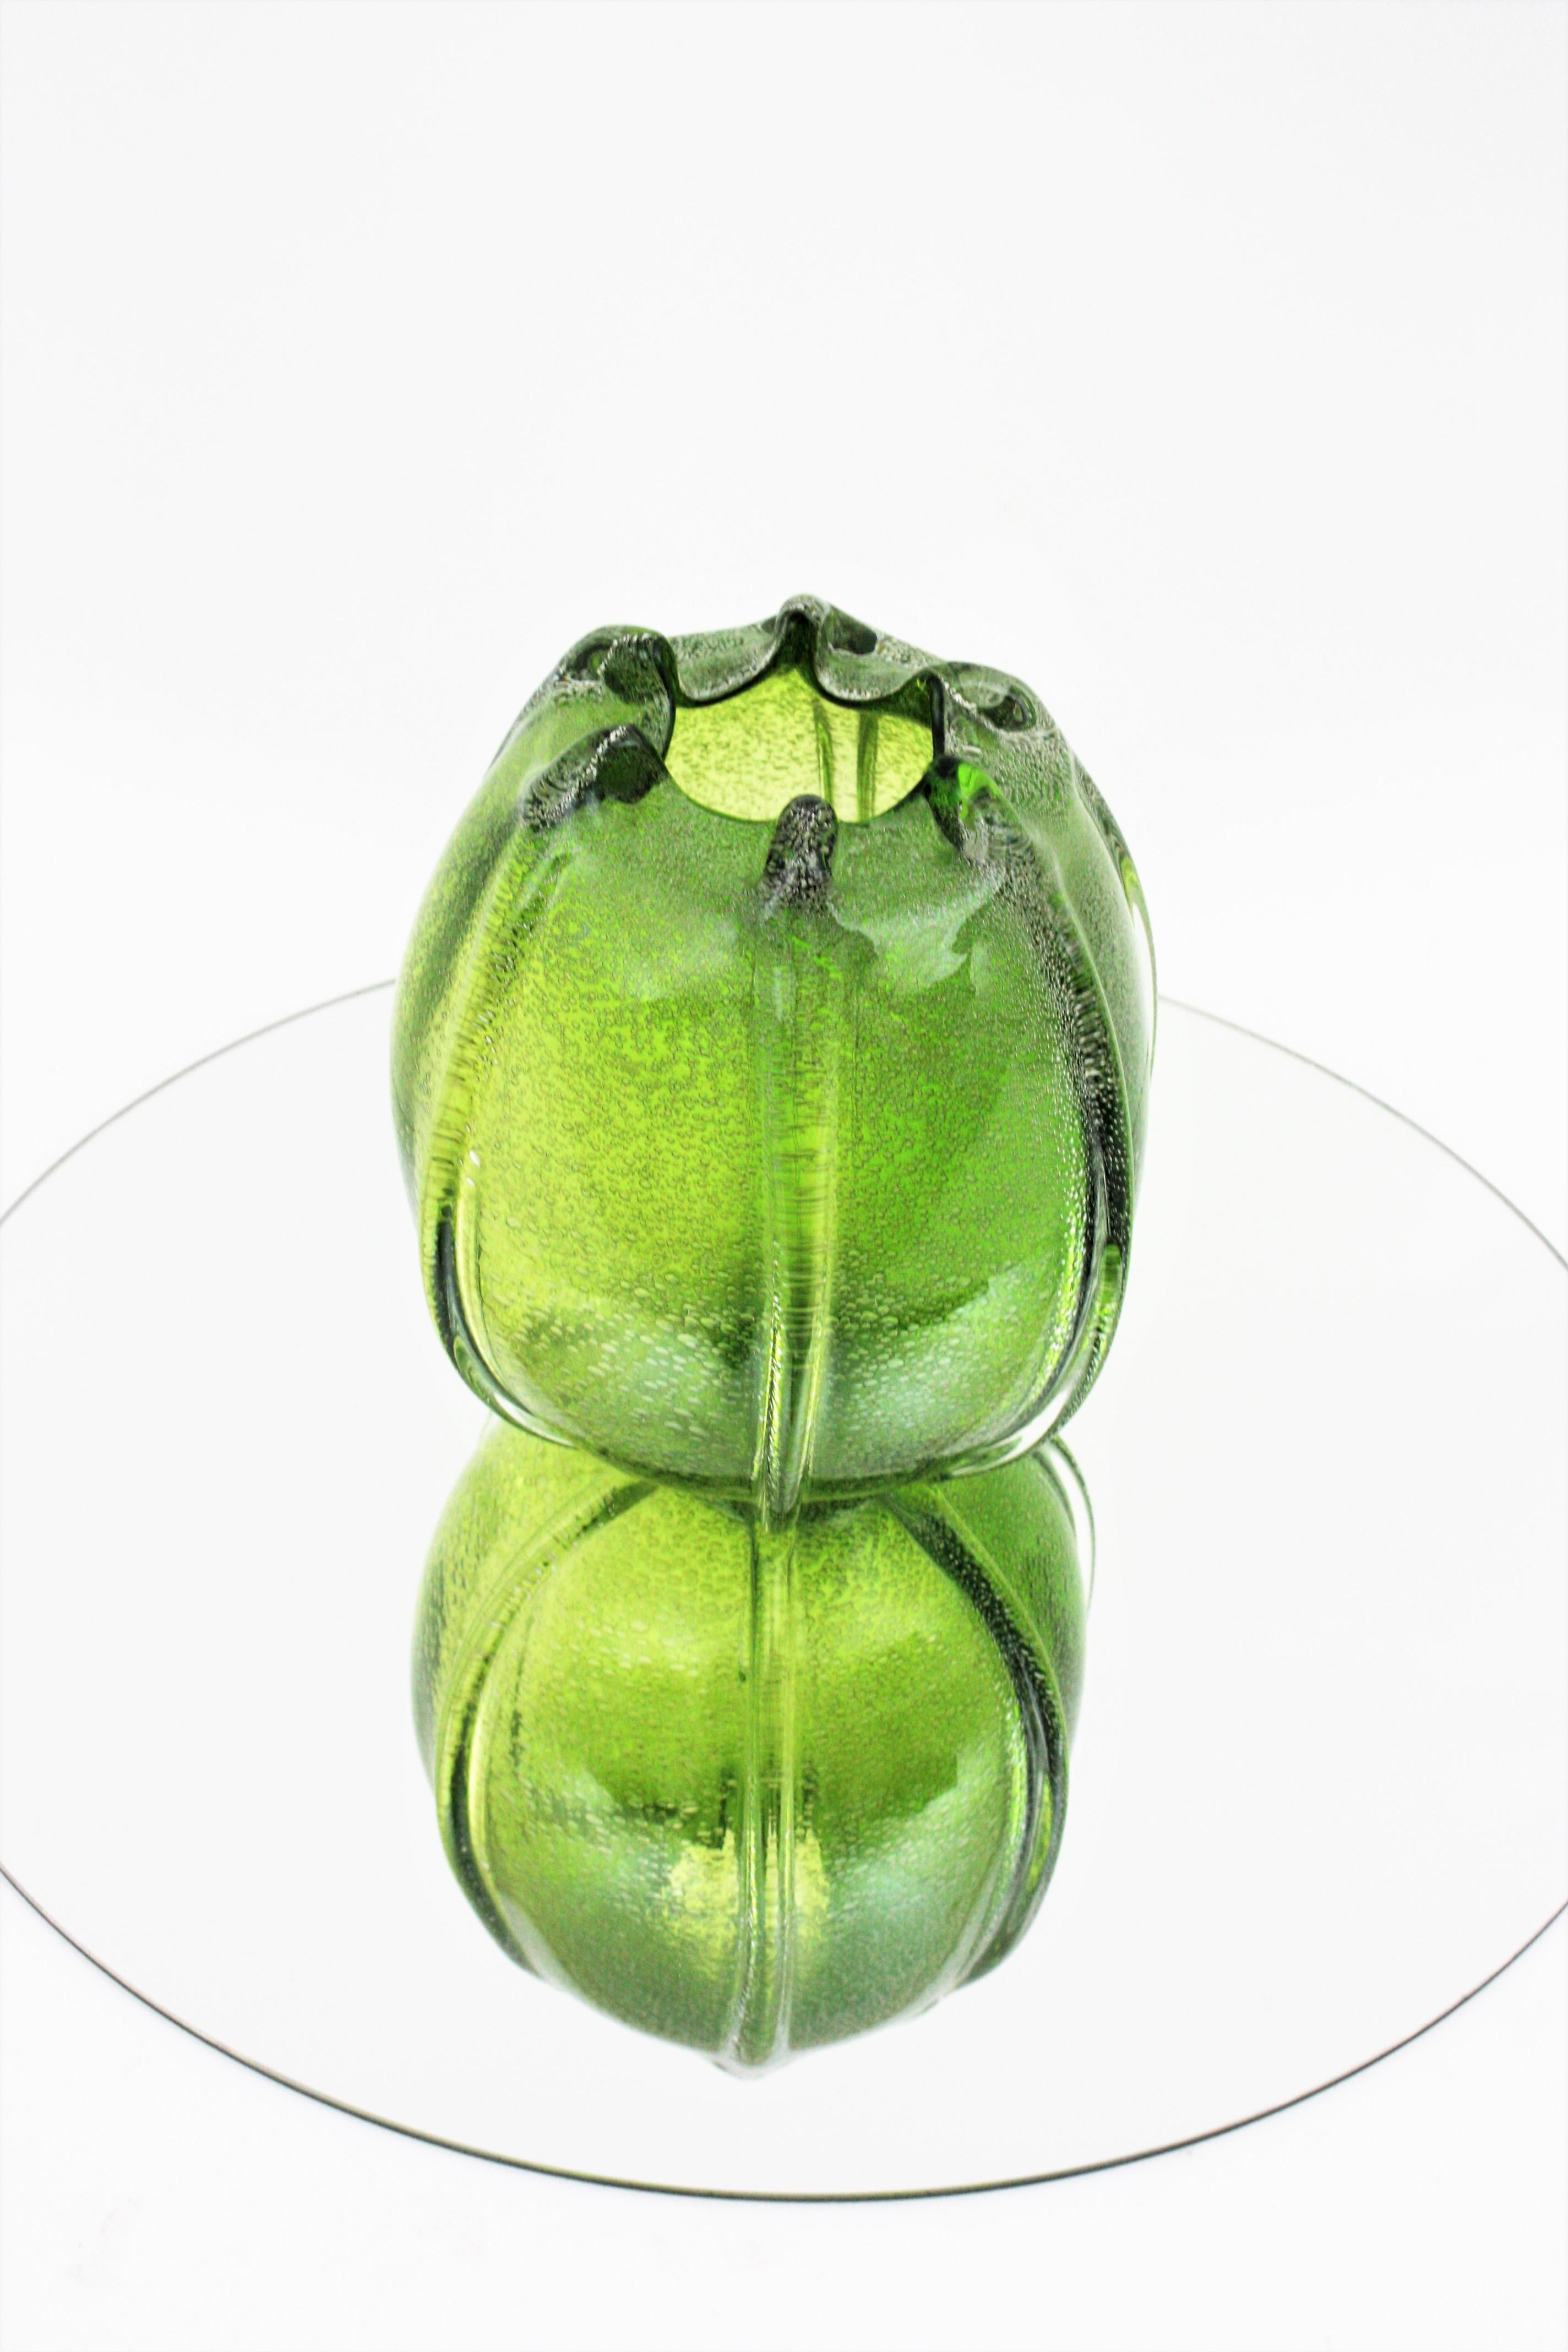 Mid-Century Modern Archimede Seguso Green Murano Glass Pulegoso Ovoid Vase, 1950s For Sale